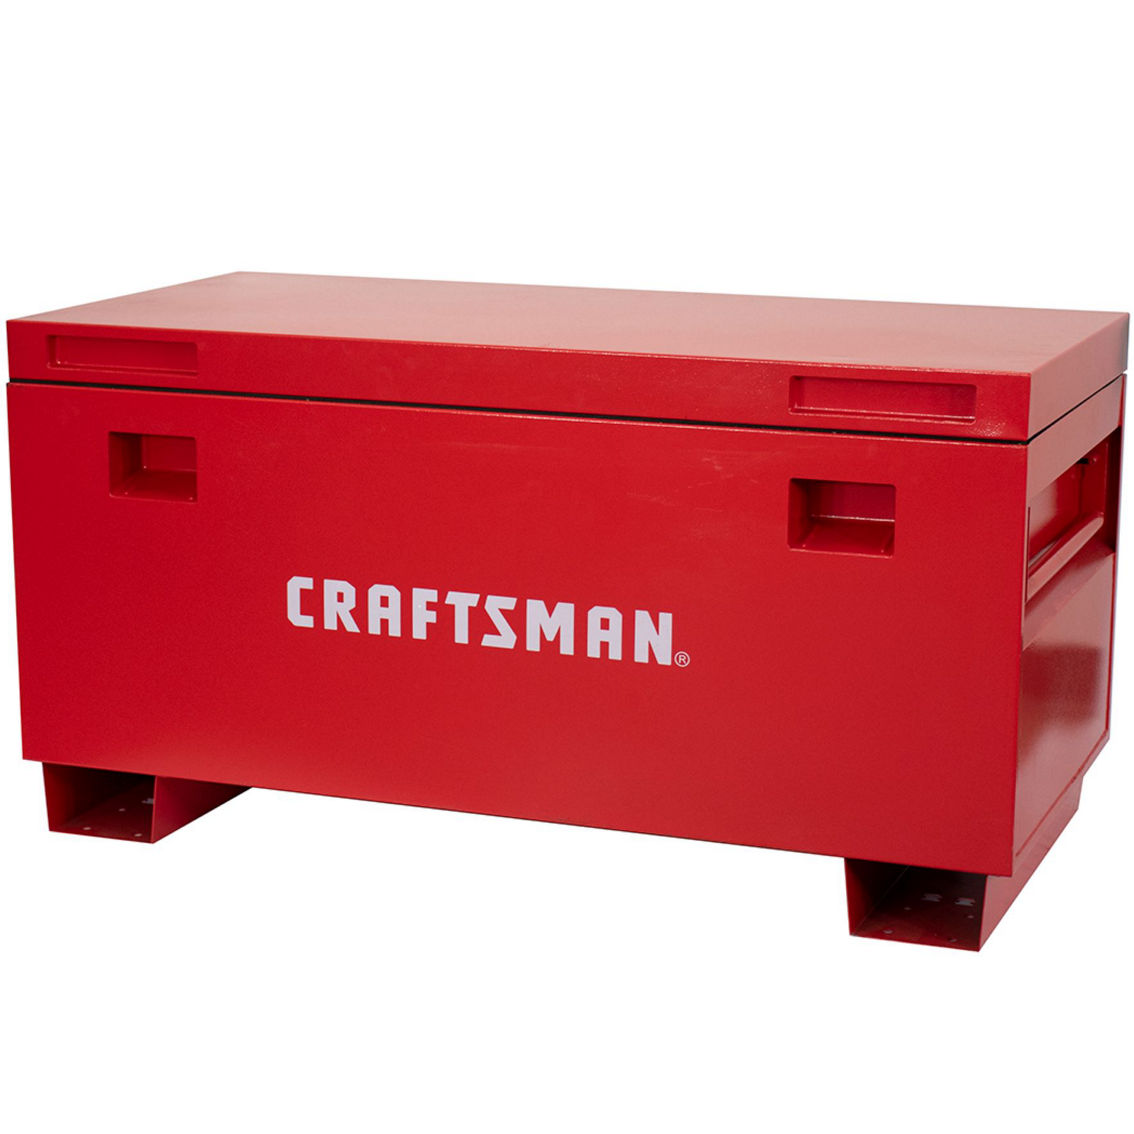 Craftsman 48 in. Jobsite Box - Image 3 of 9